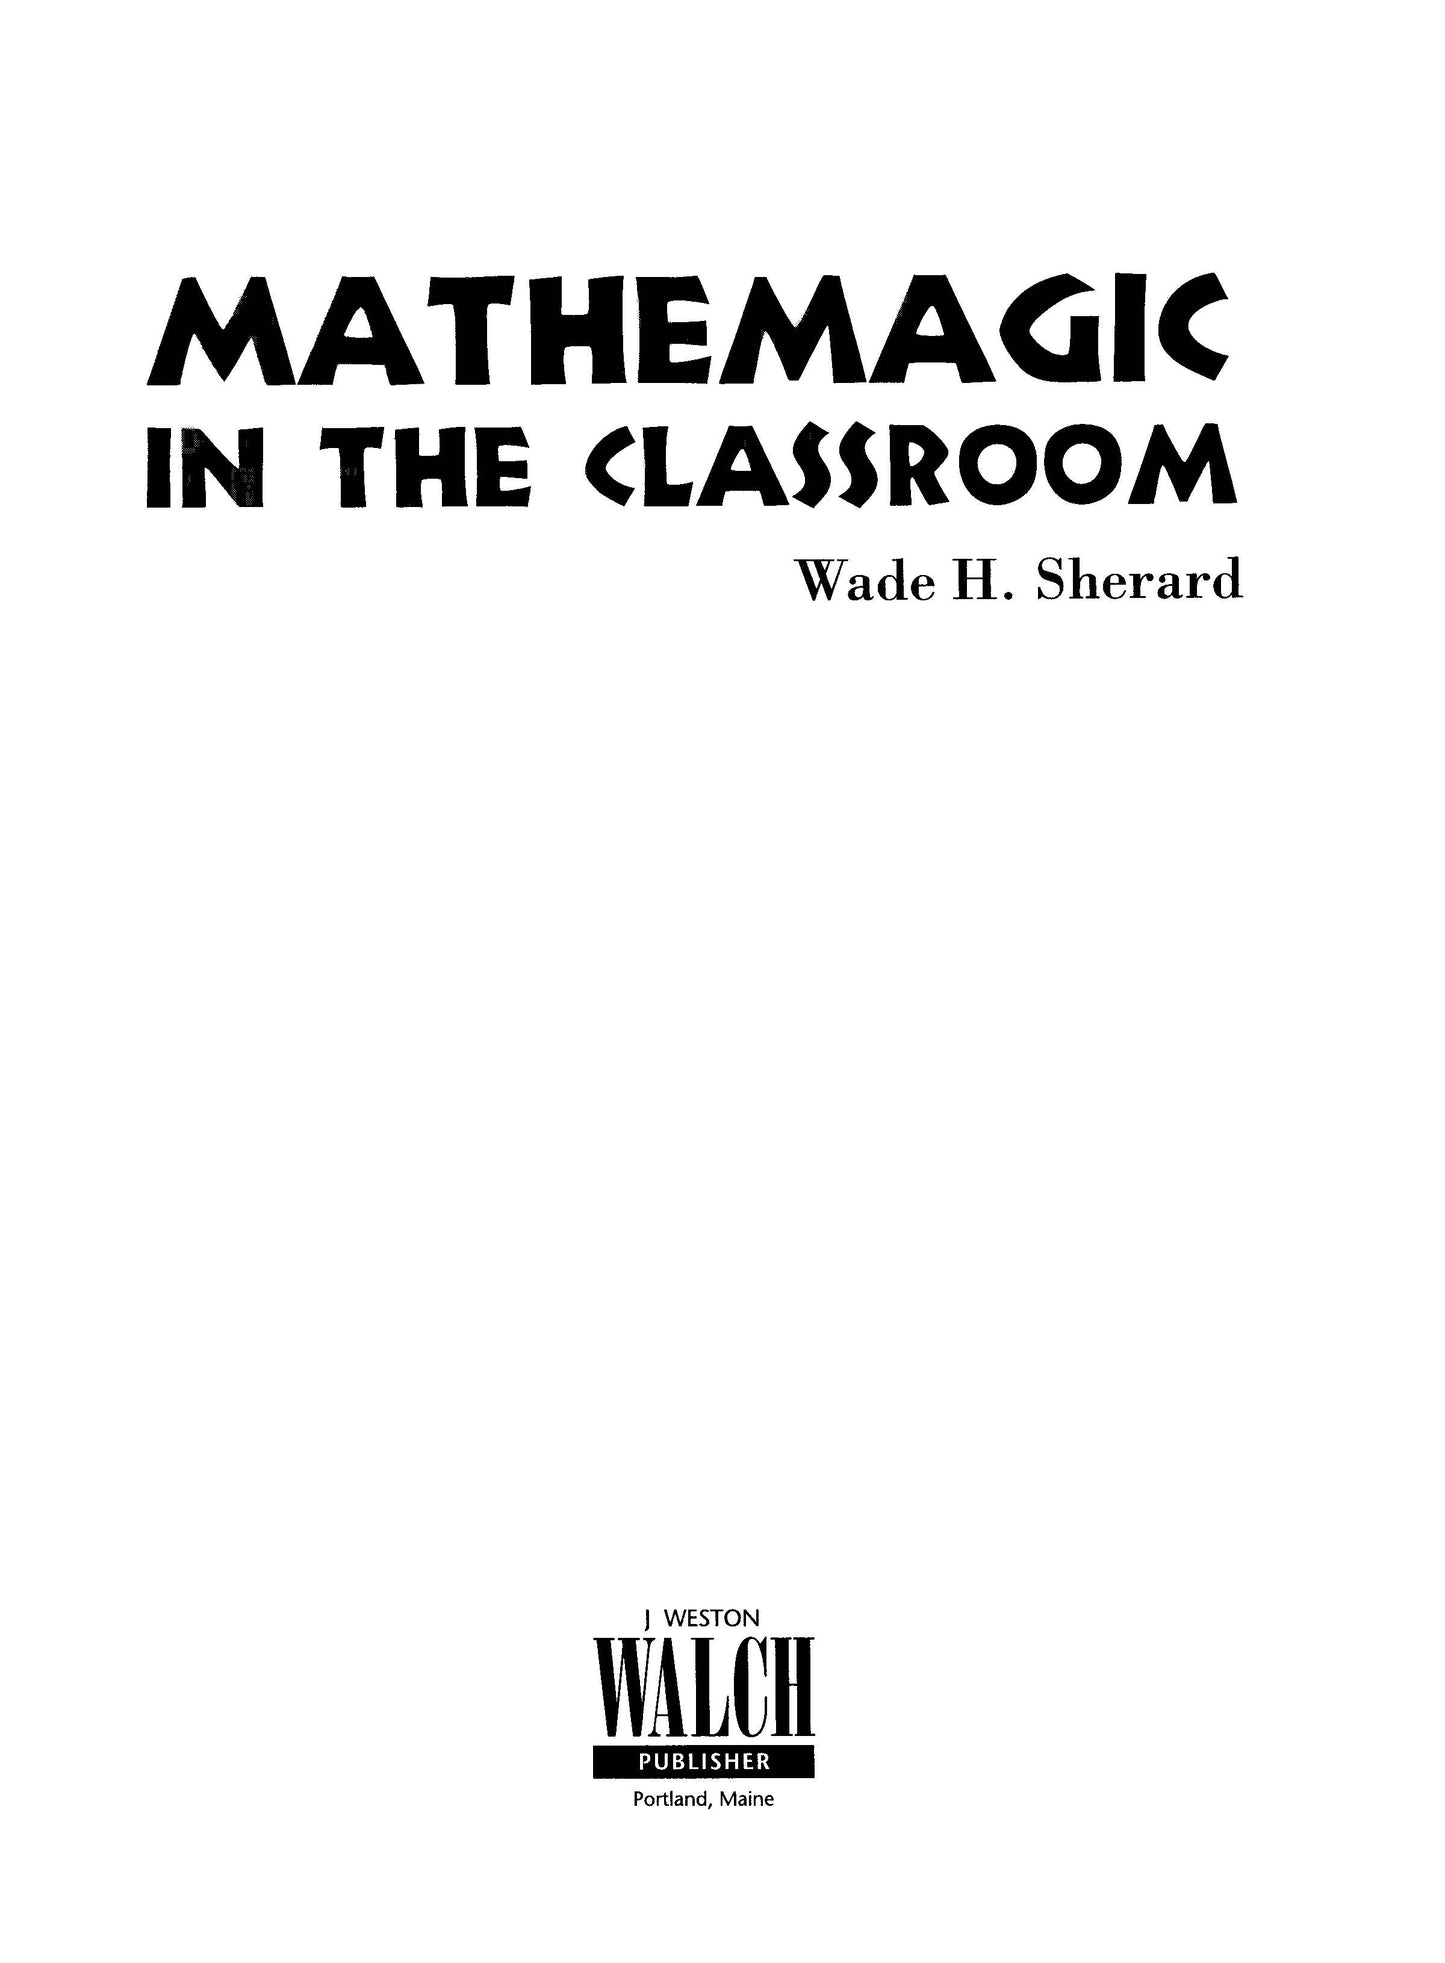 Bright Education Australia, Teacher Resources, Maths, Books, Mathemagic in the Classroom 